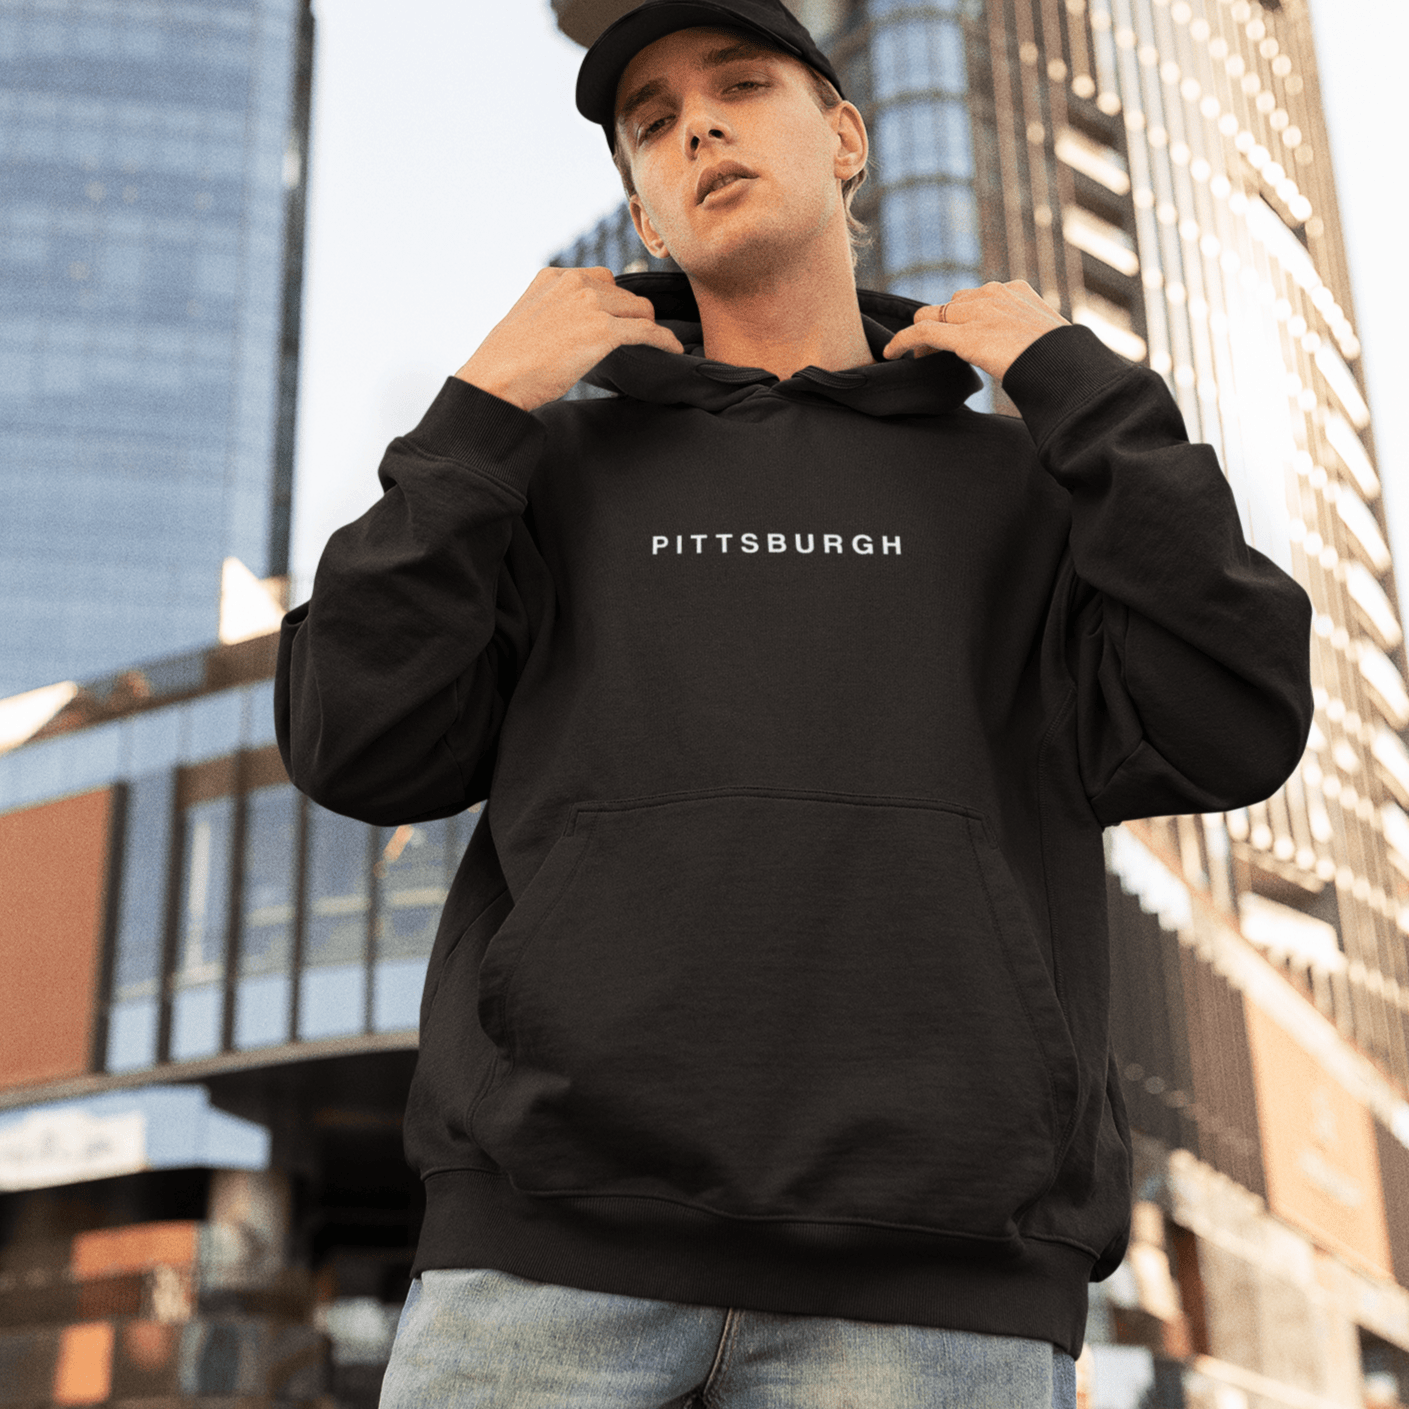 City Shirt Co Pittsburgh Hoodie